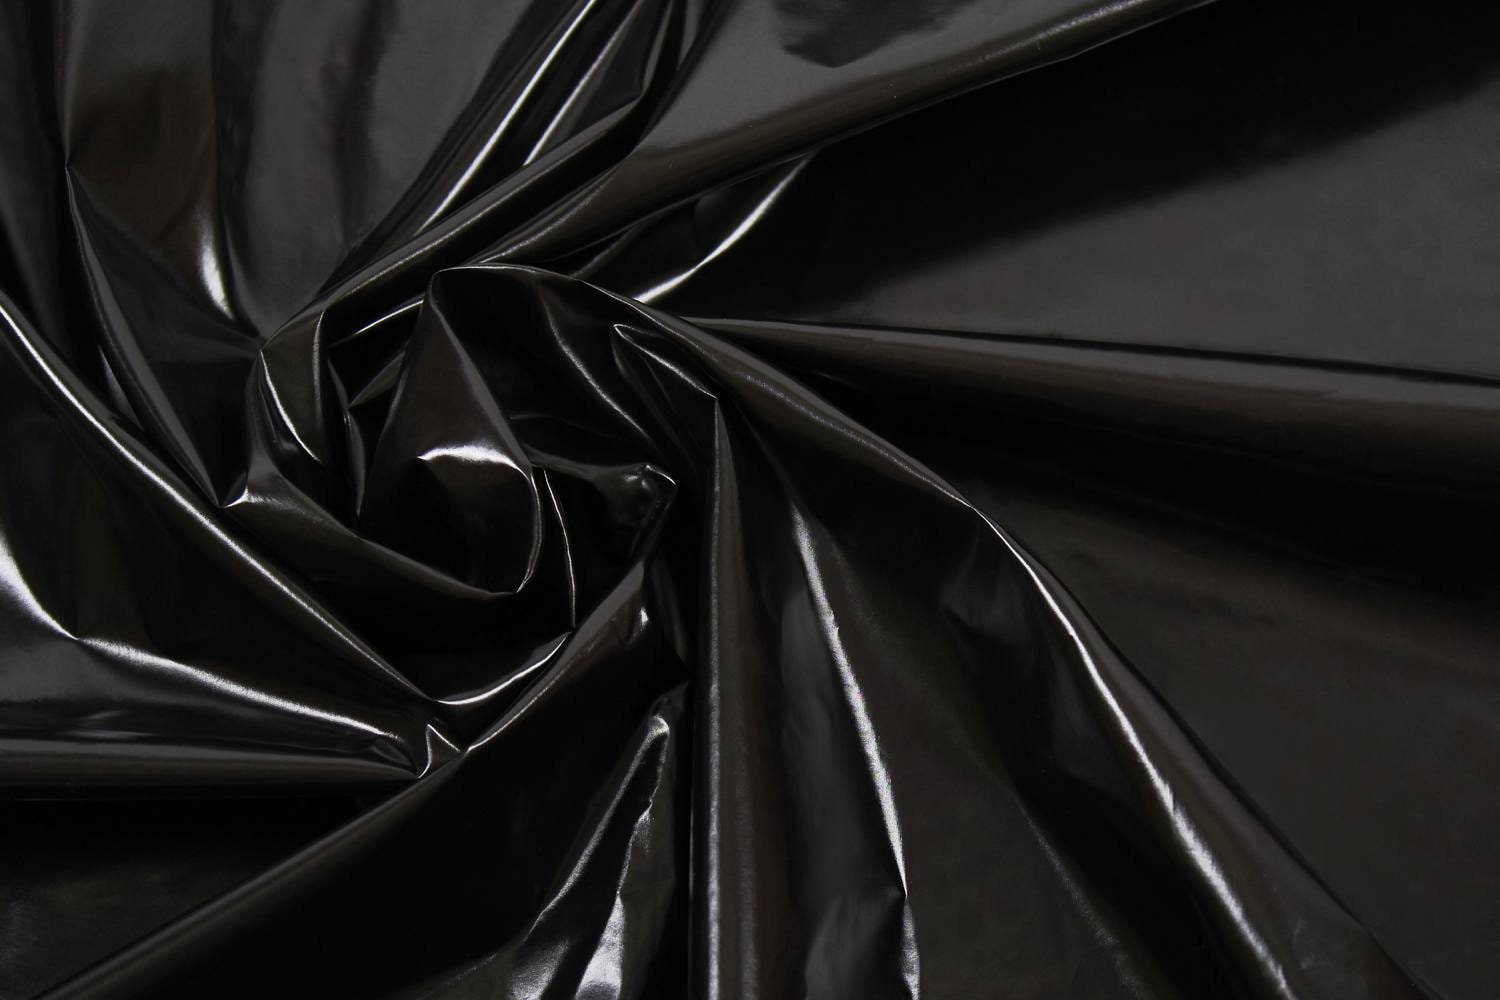 Black Shiny Glossy PVC Pleather 4 Way Stretch Fabric , Black Latex Fabric  by Yard, Black Faux Patent Leather, Black Glossy Vinyl Fabric -  Denmark